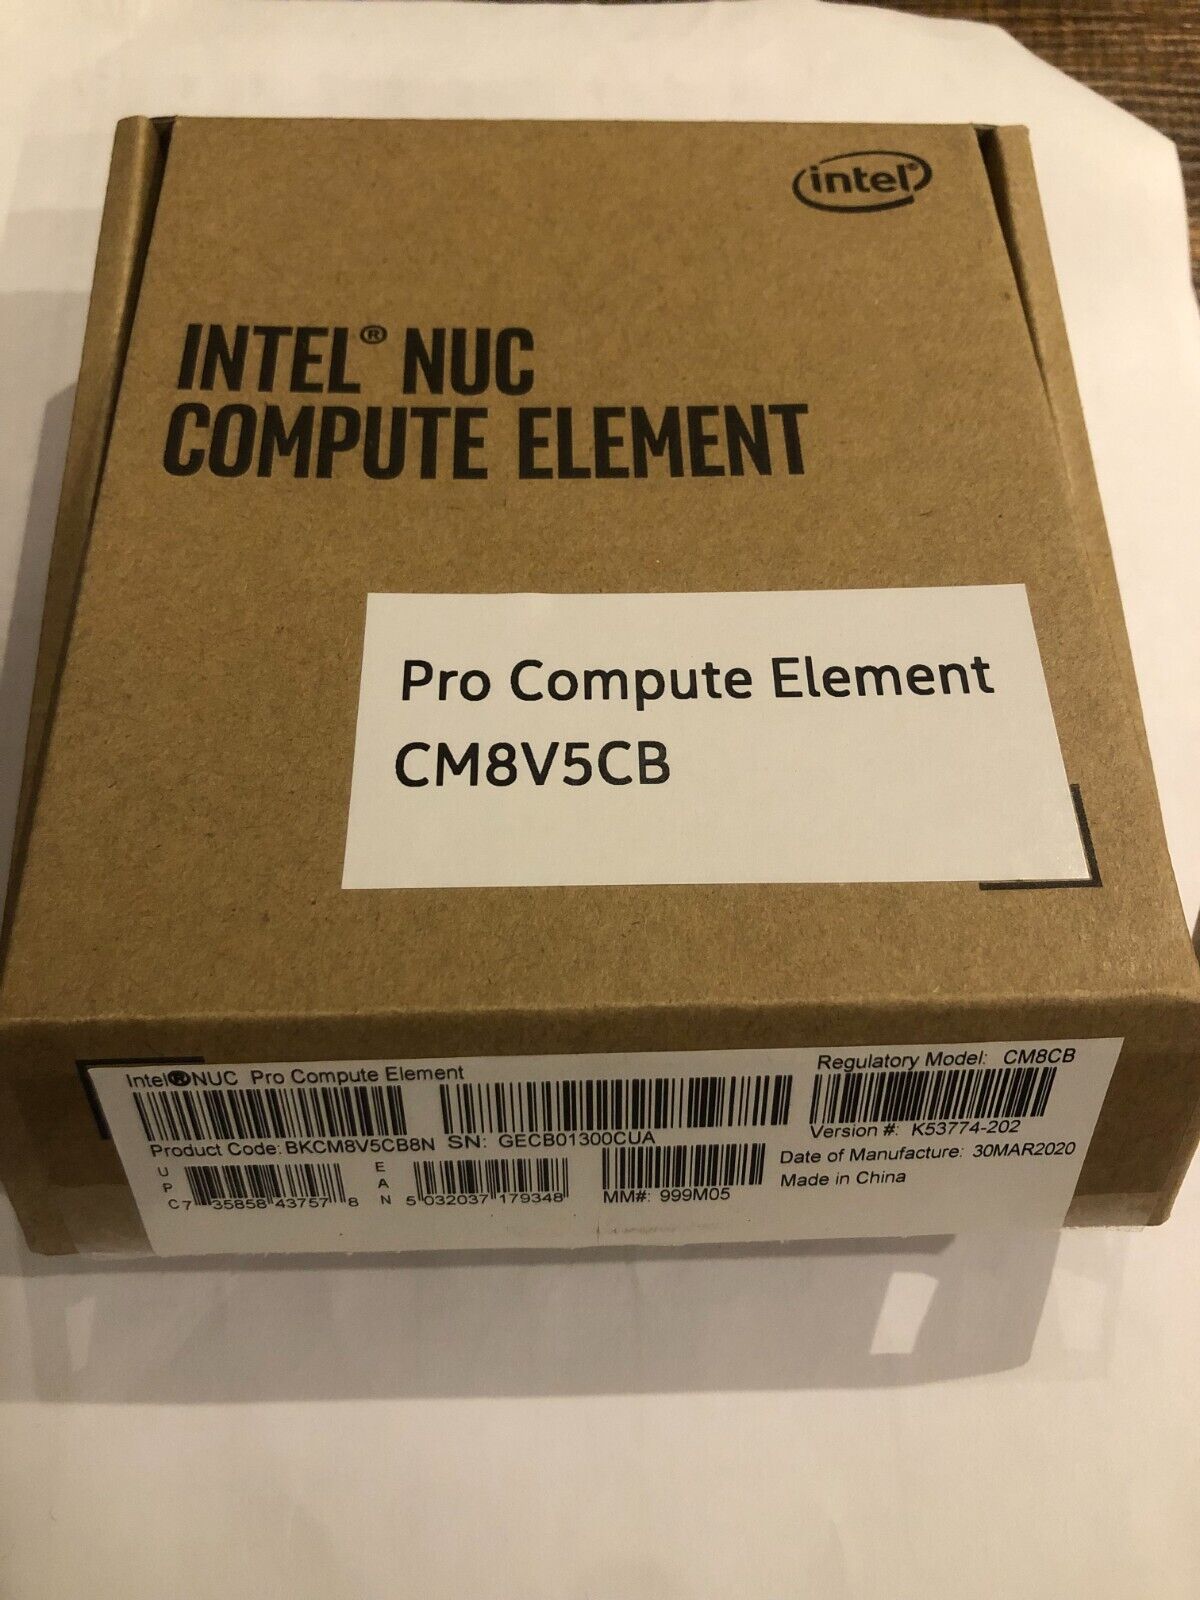 Intel BKCM8V5CB8N CM8V5CB NUC Pro Compute Element  - NEW - Open Box, Sealed Bag